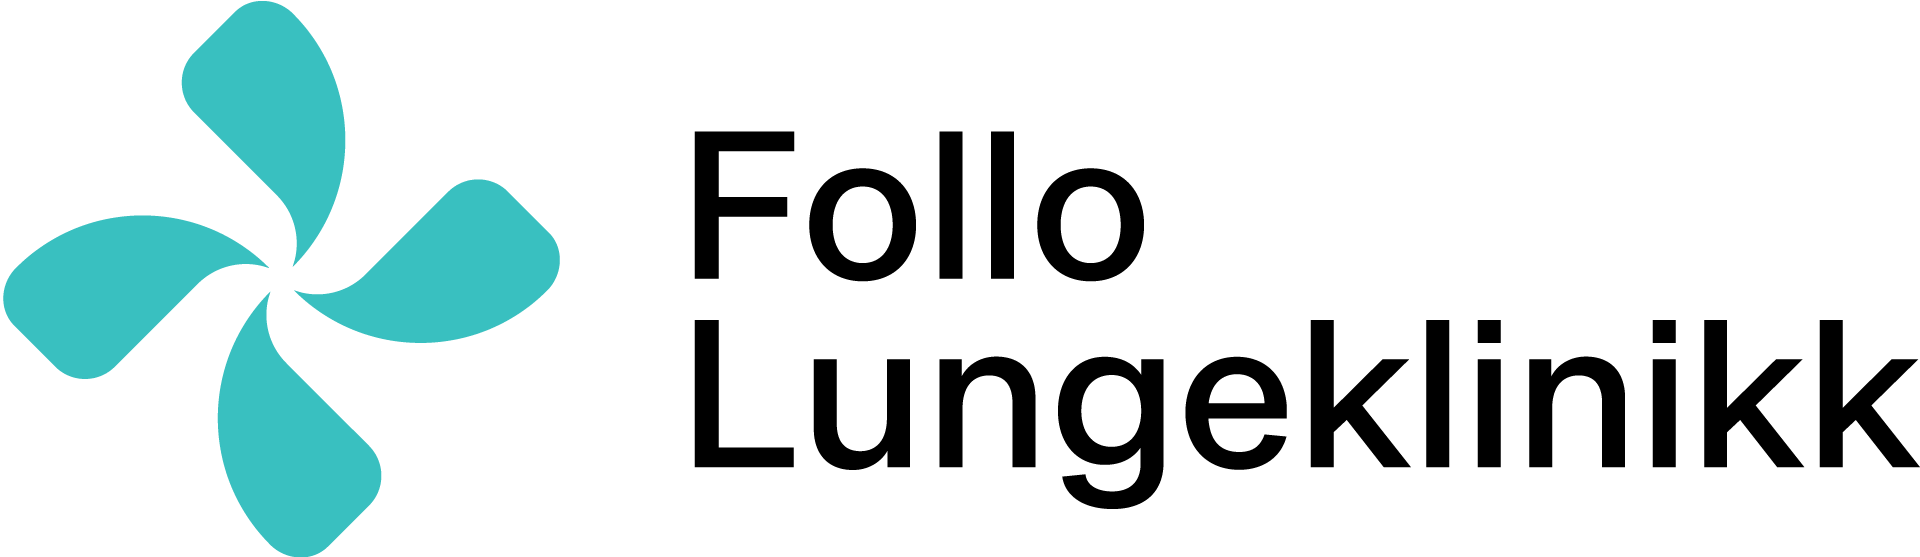 Follo Lungeklinikk  sin logo